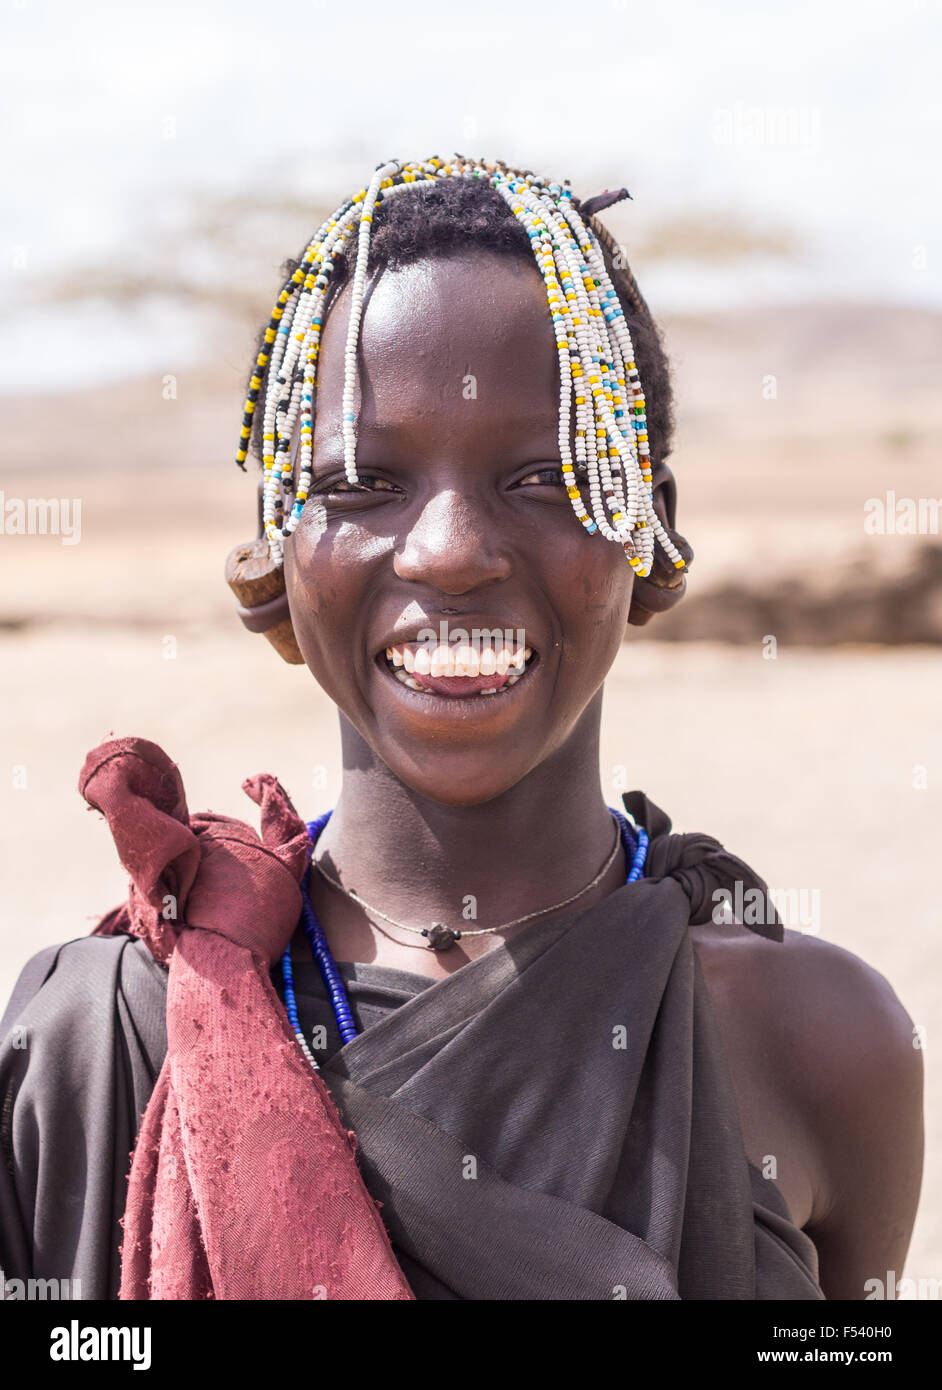 Smiling Maasai young girl in Arusha region, Tanzania, Africa. Stock Photo